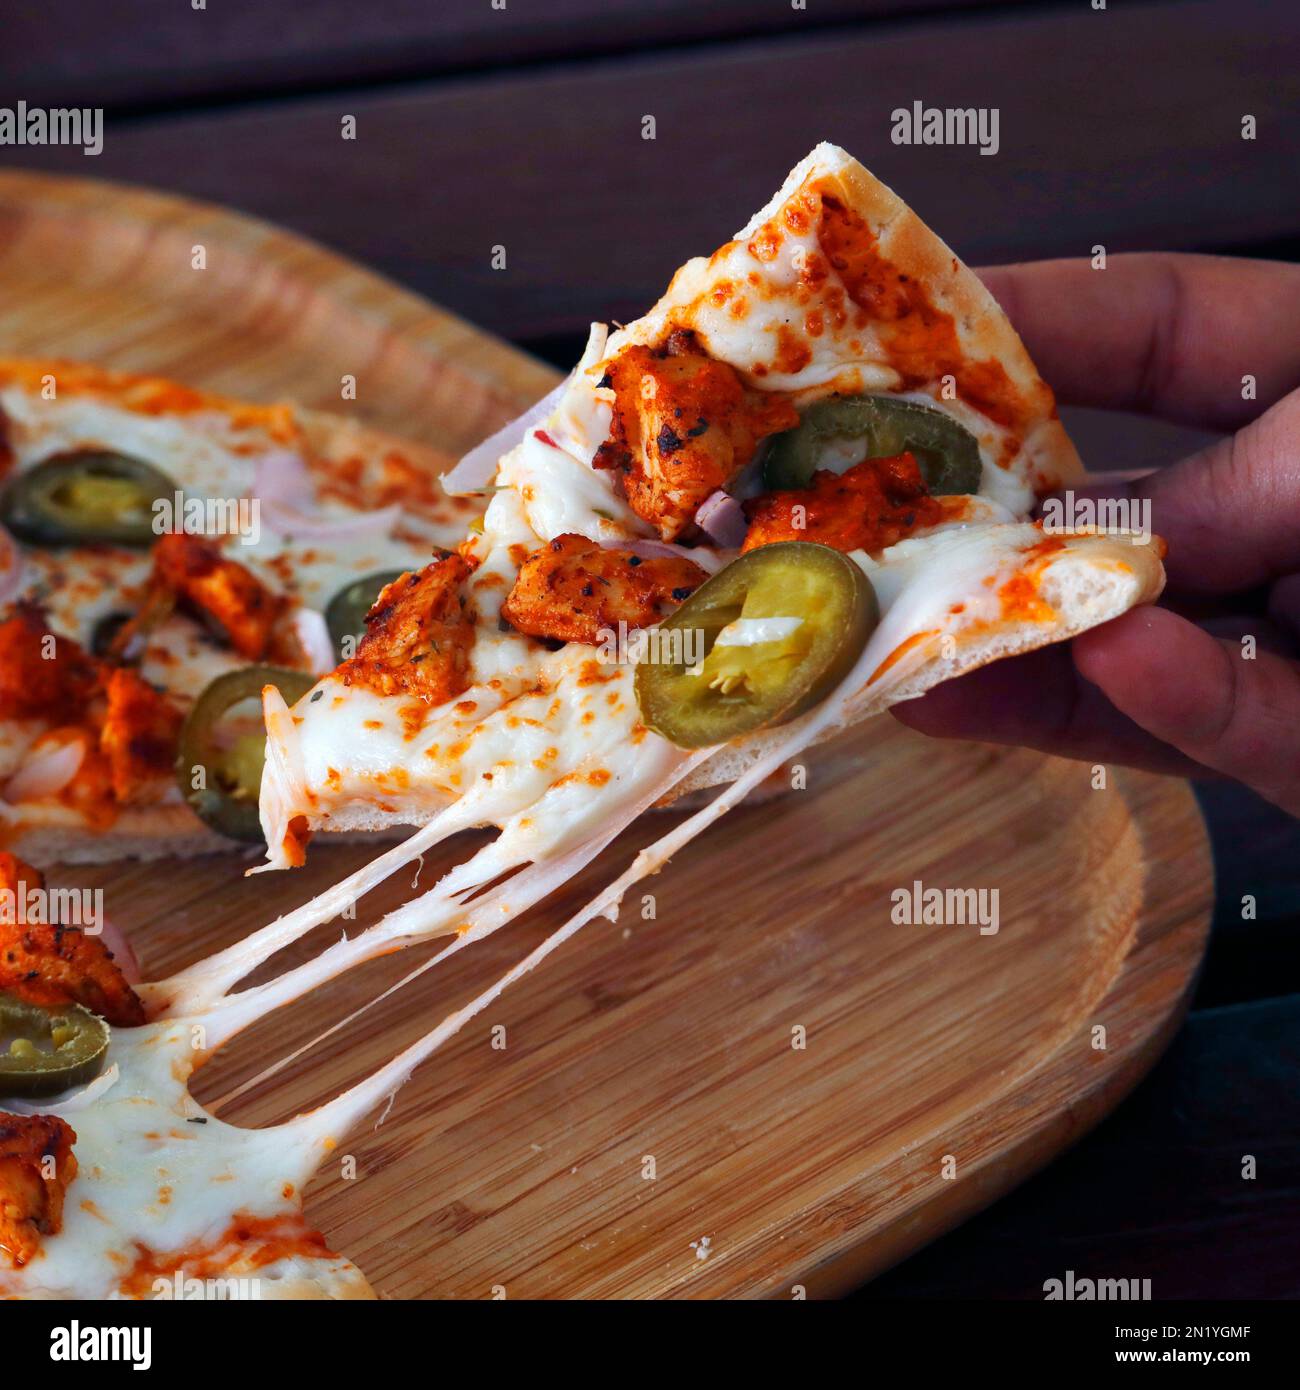 melty cheesy pizza, spiced chicken cubes and mozzarella cheese combination on flat bread, italian food Stock Photo